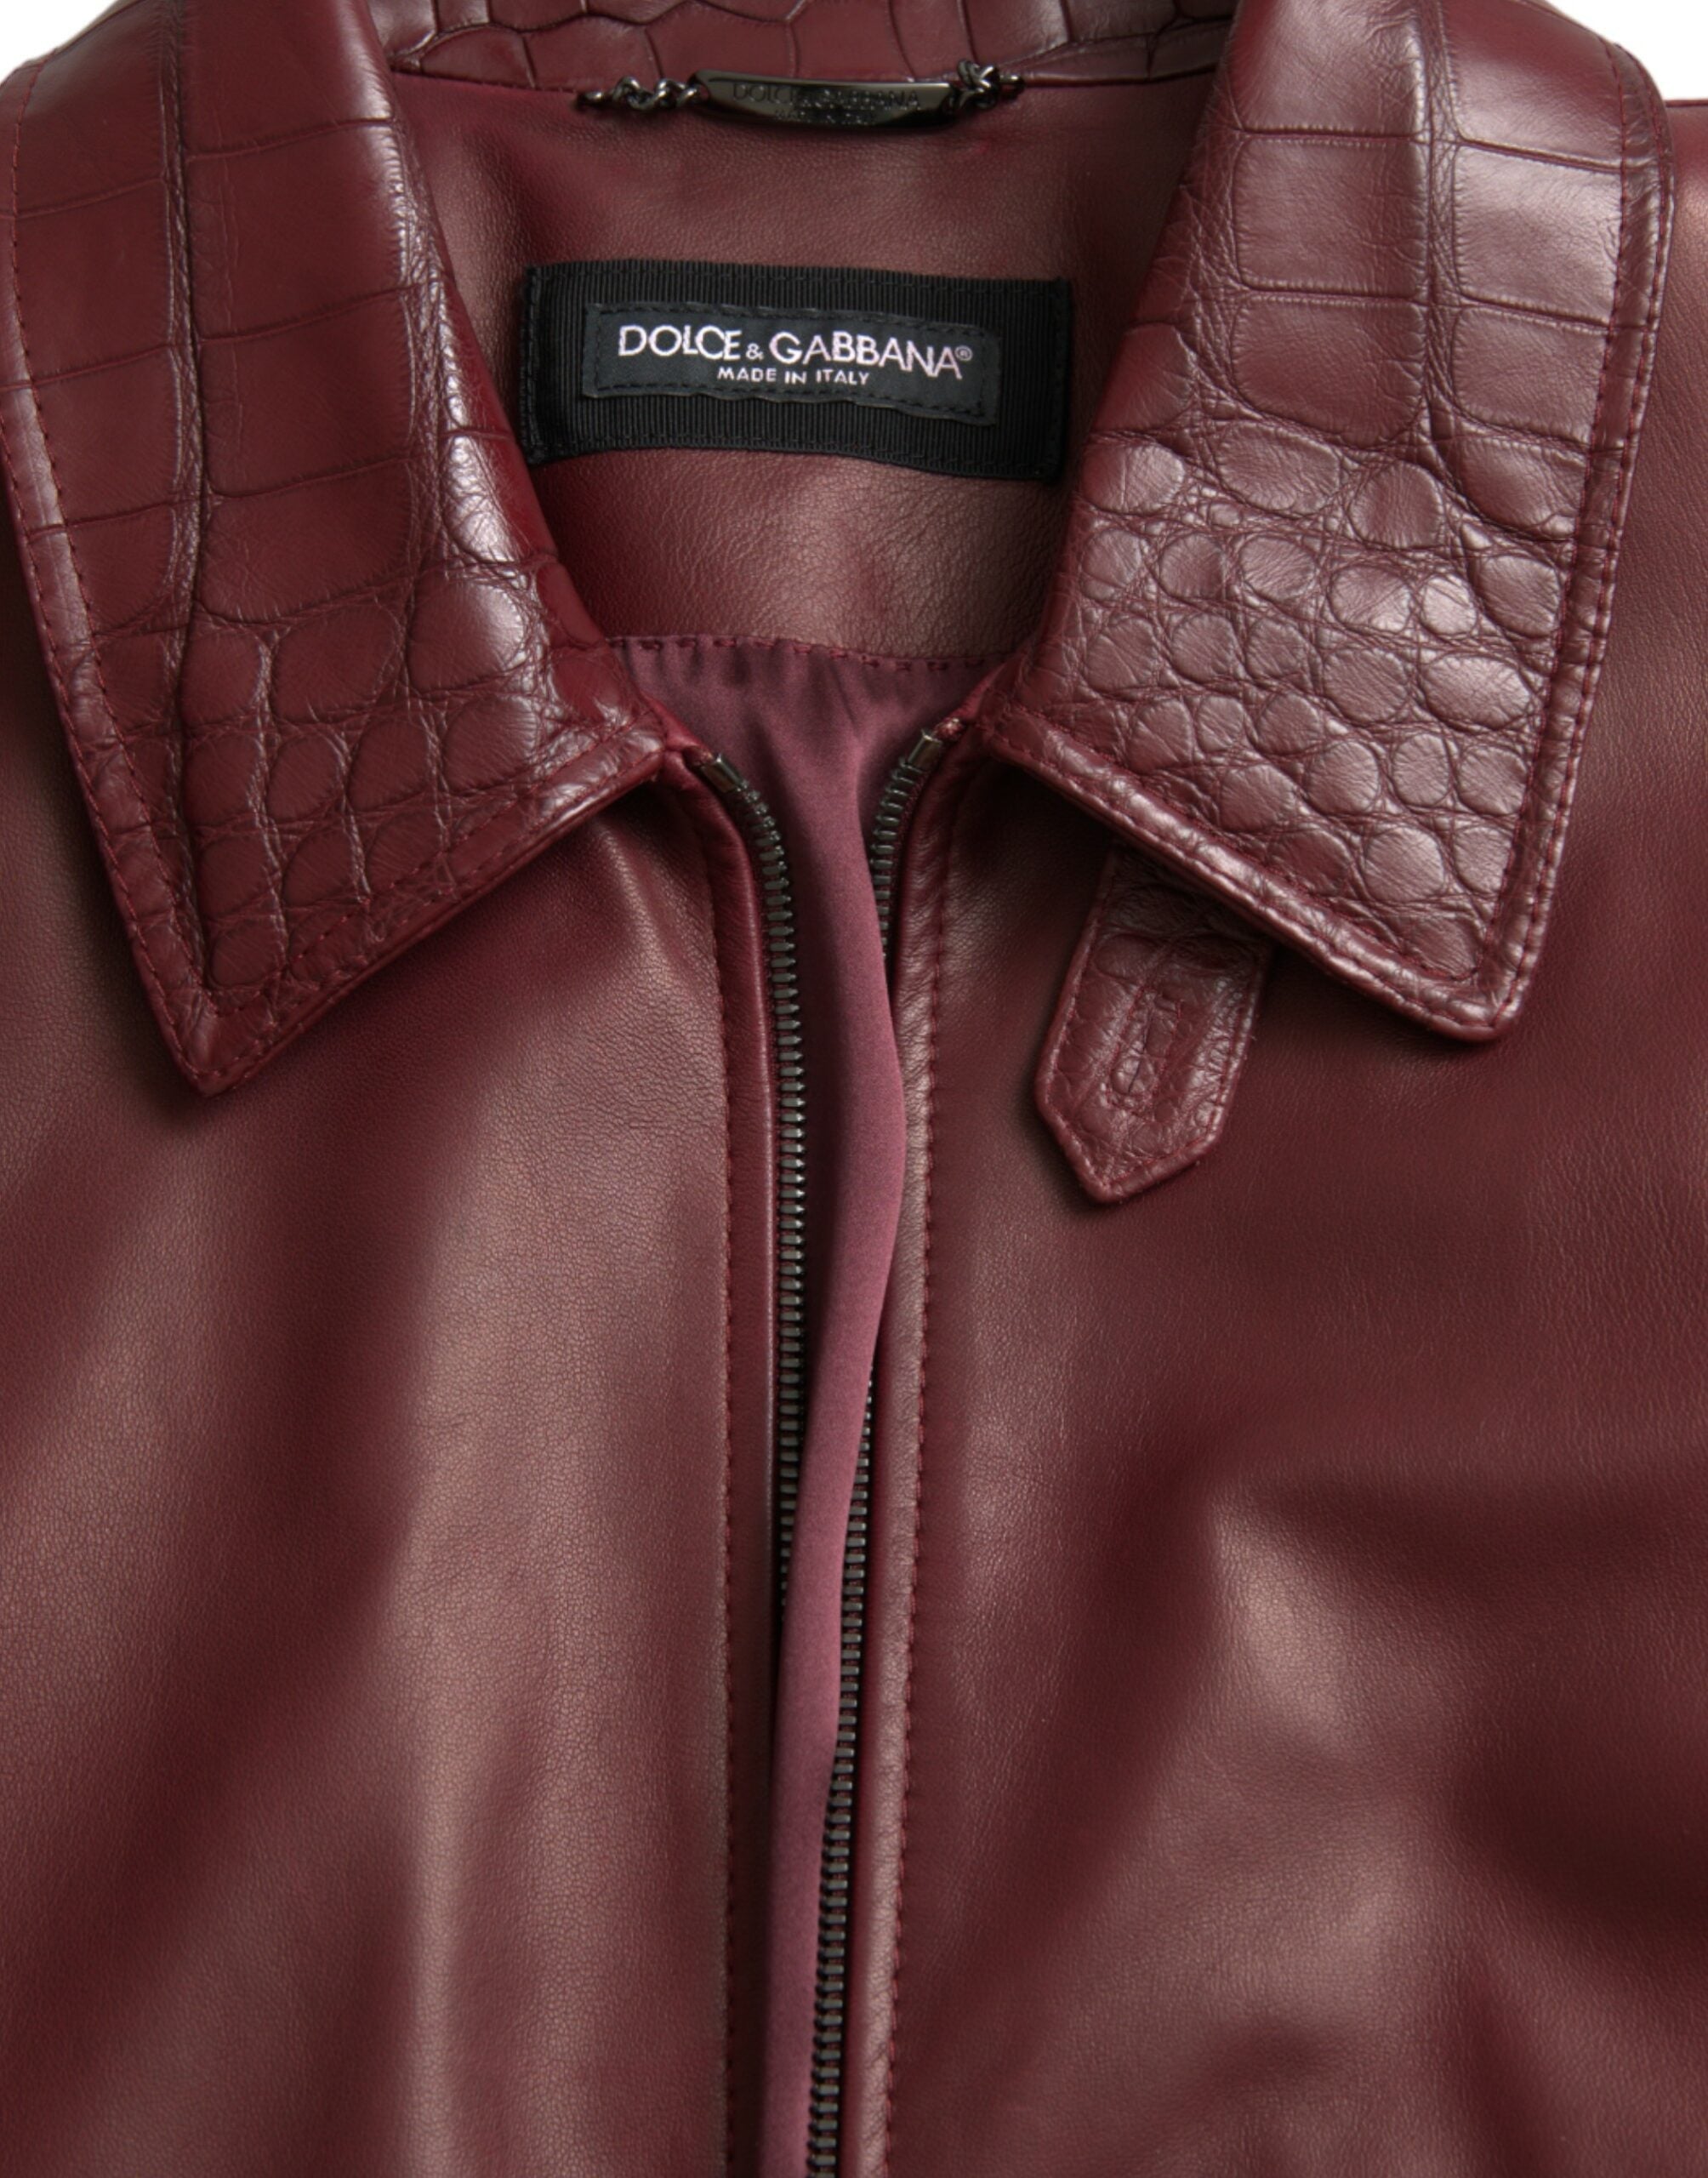 Dolce & Gabbana Maroon Exotic Læder Zip Biker Coat Jakke & Frakke-Modeoutlet